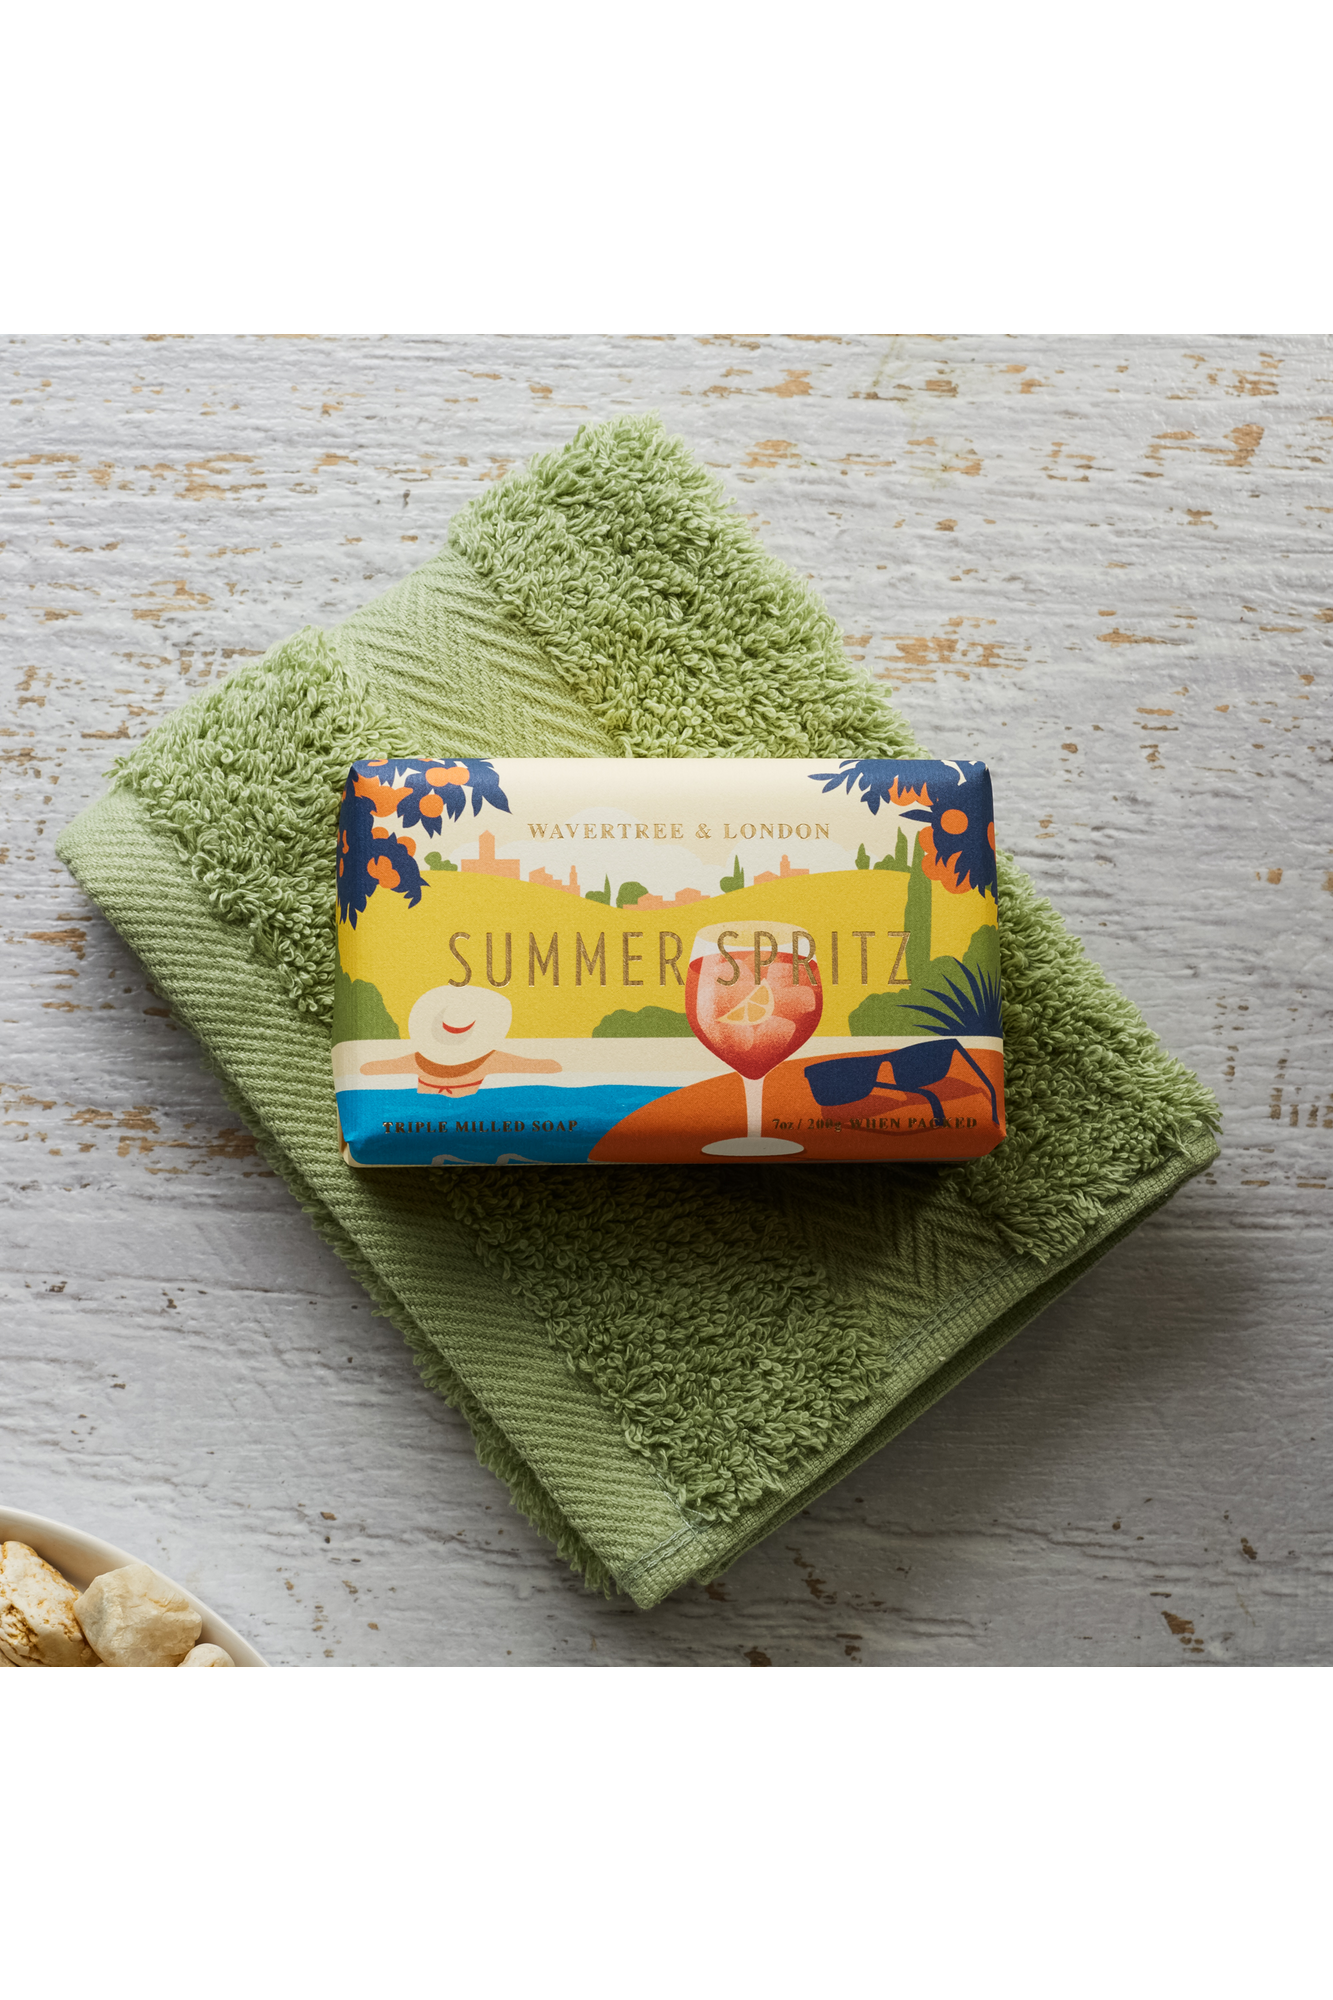 Wavertree & London Soap - Summer Spritz